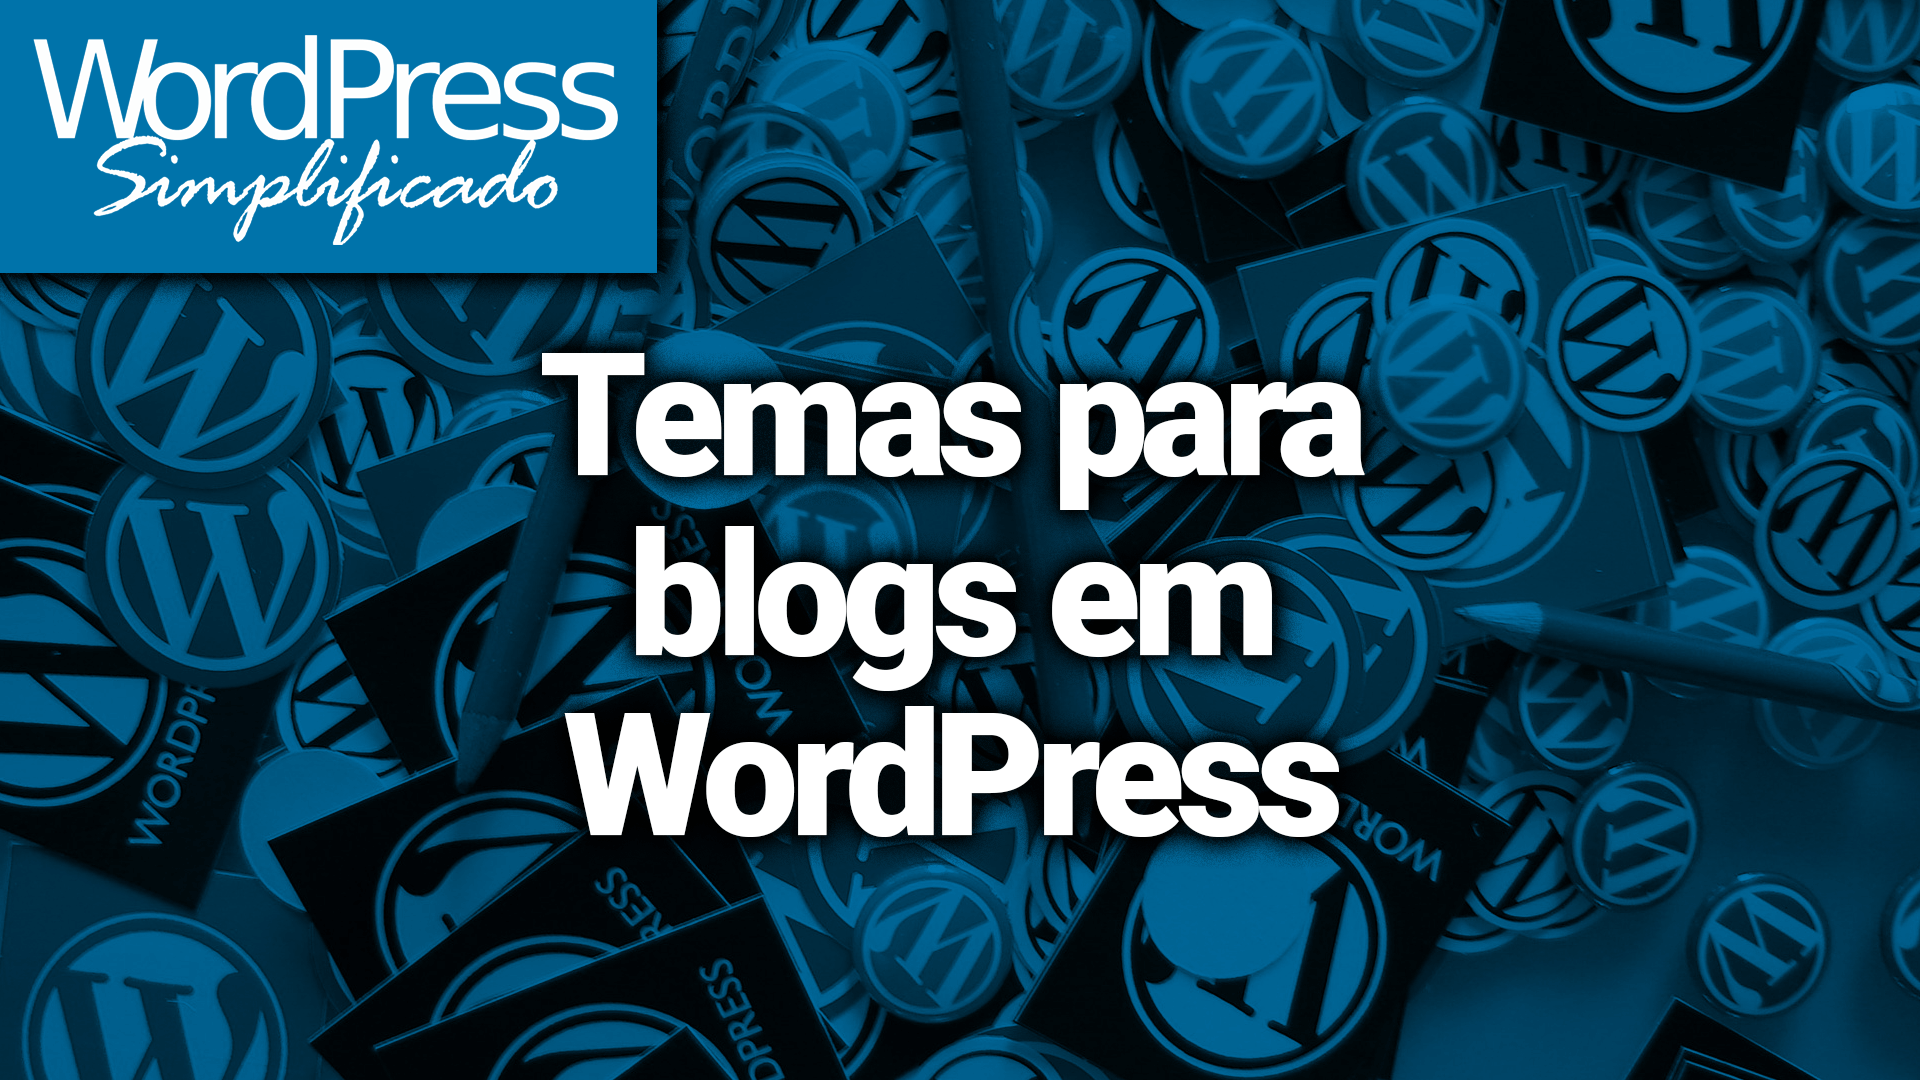 Temas para blogs em WordPress